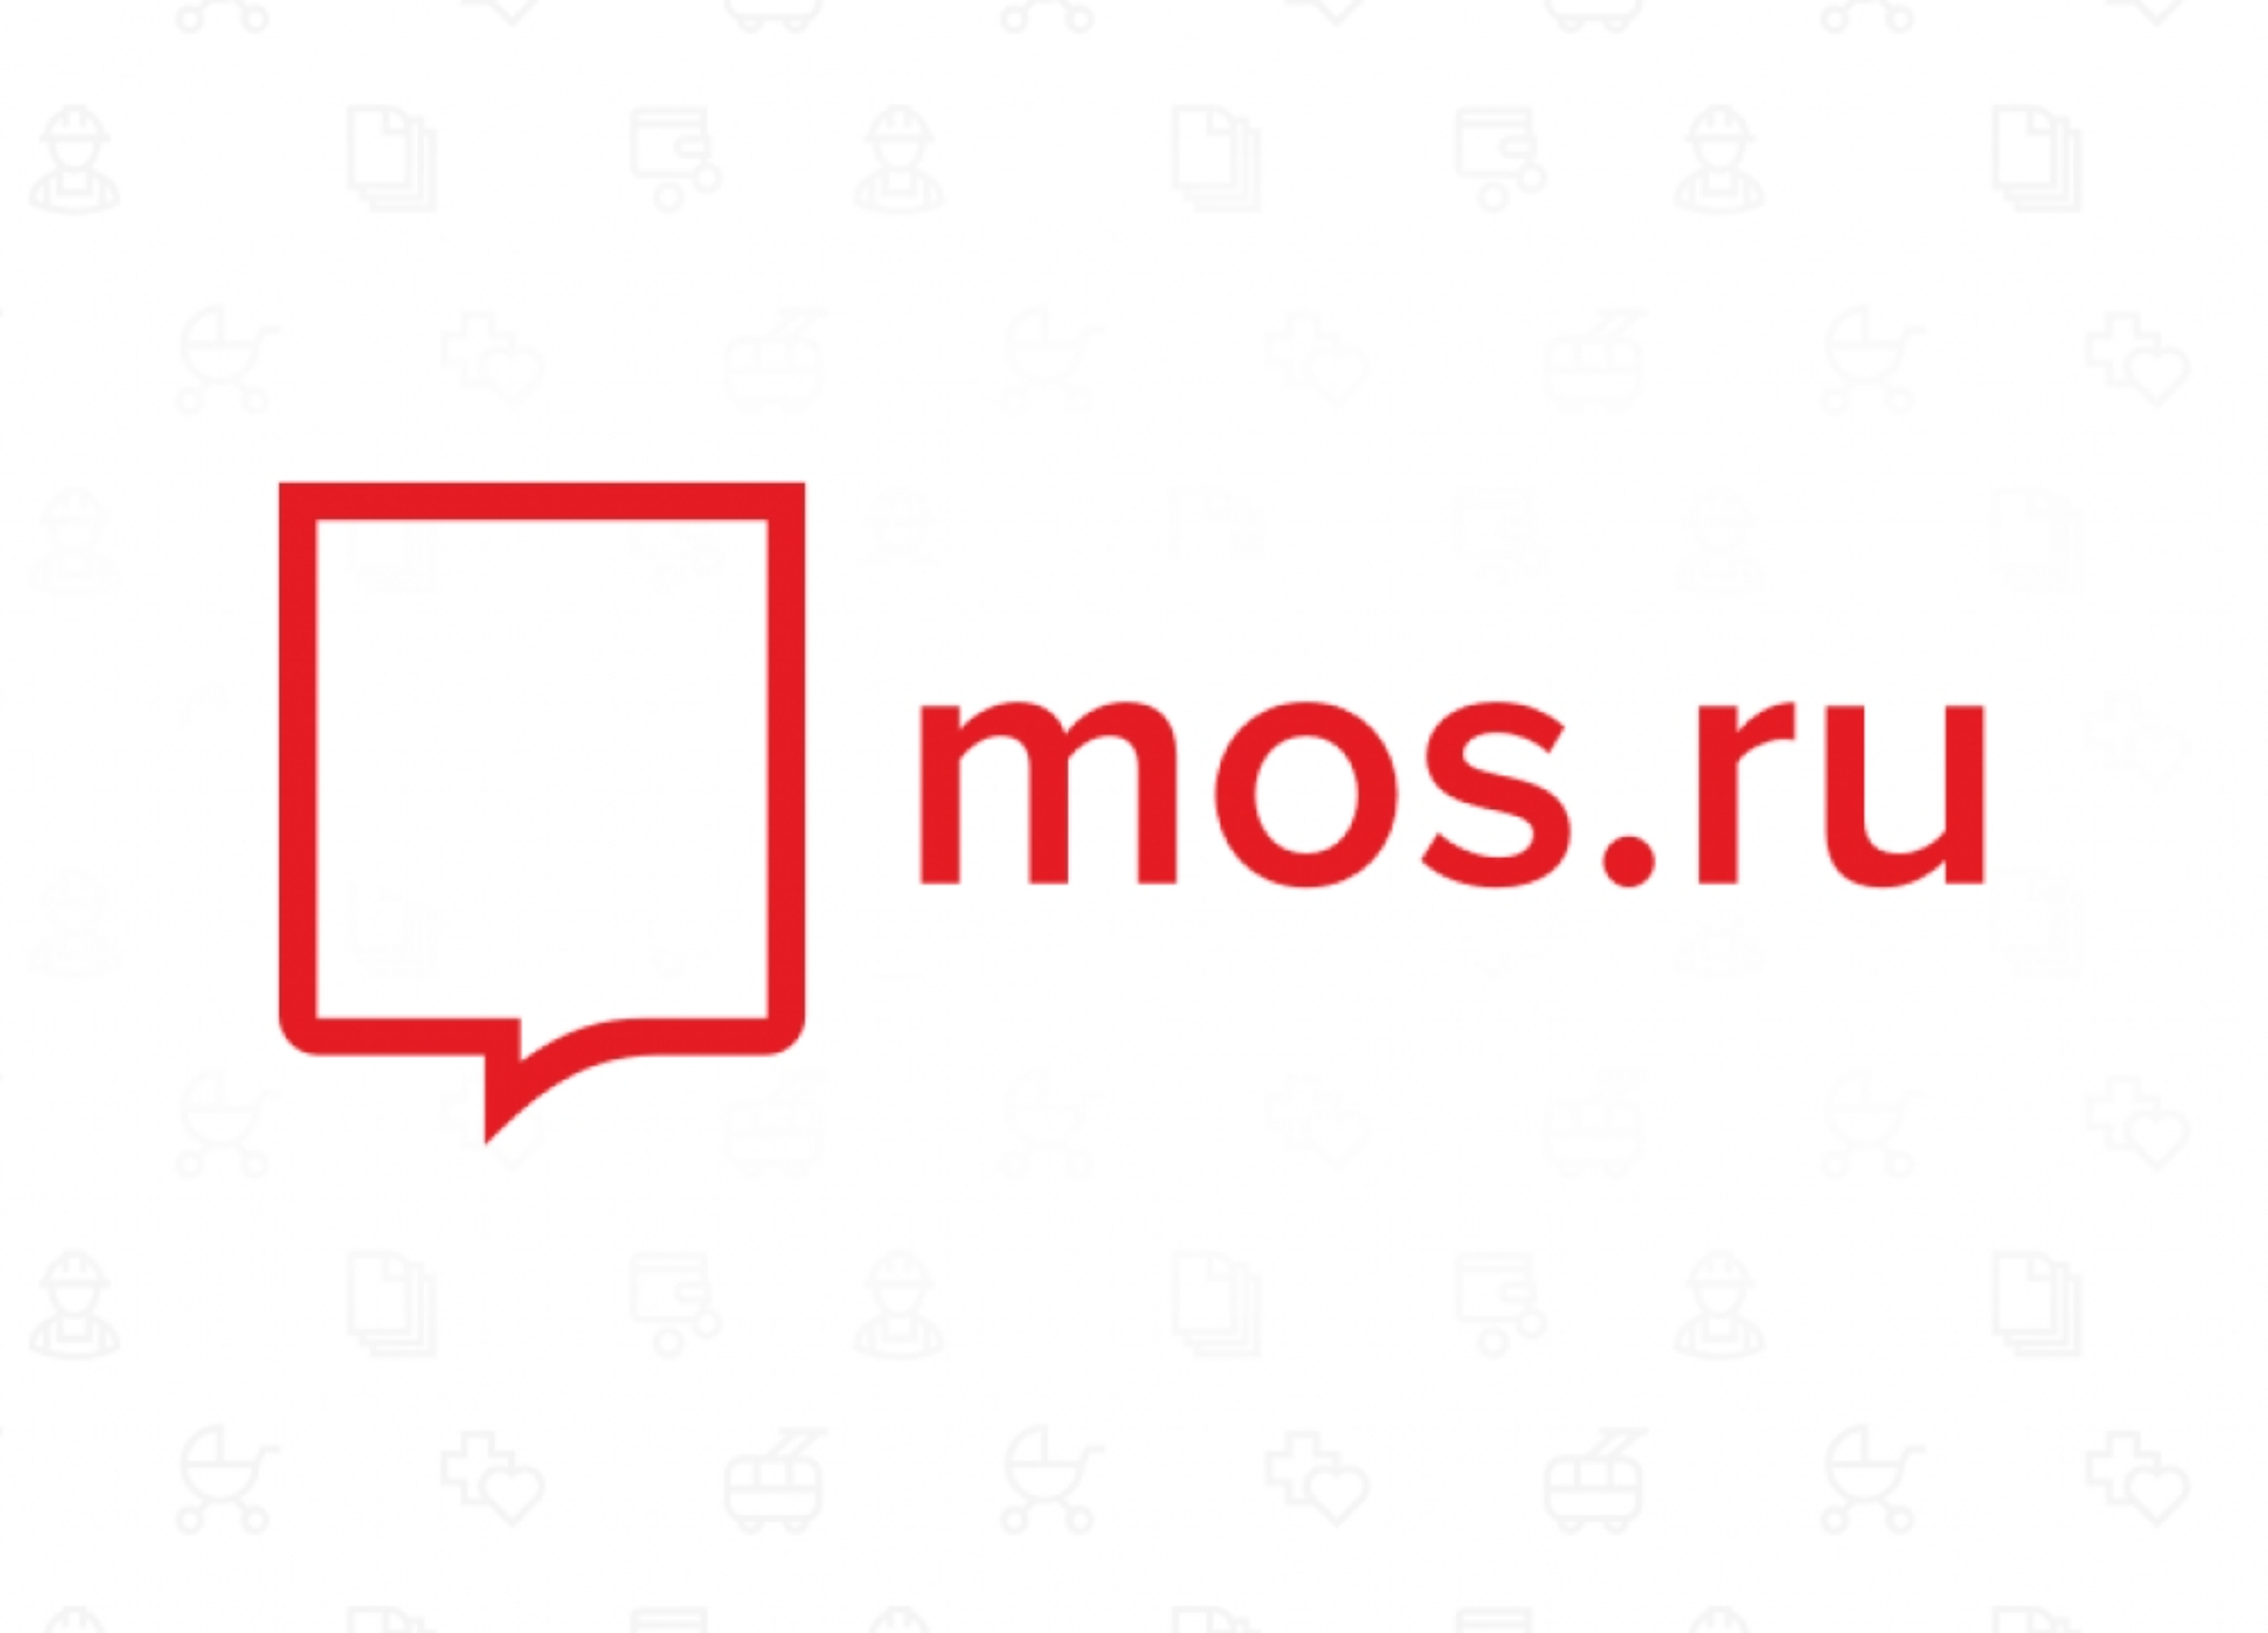 Мос ру проект. Mos.ru логотип. Логотип сайта мэра Москвы. Мос РК.